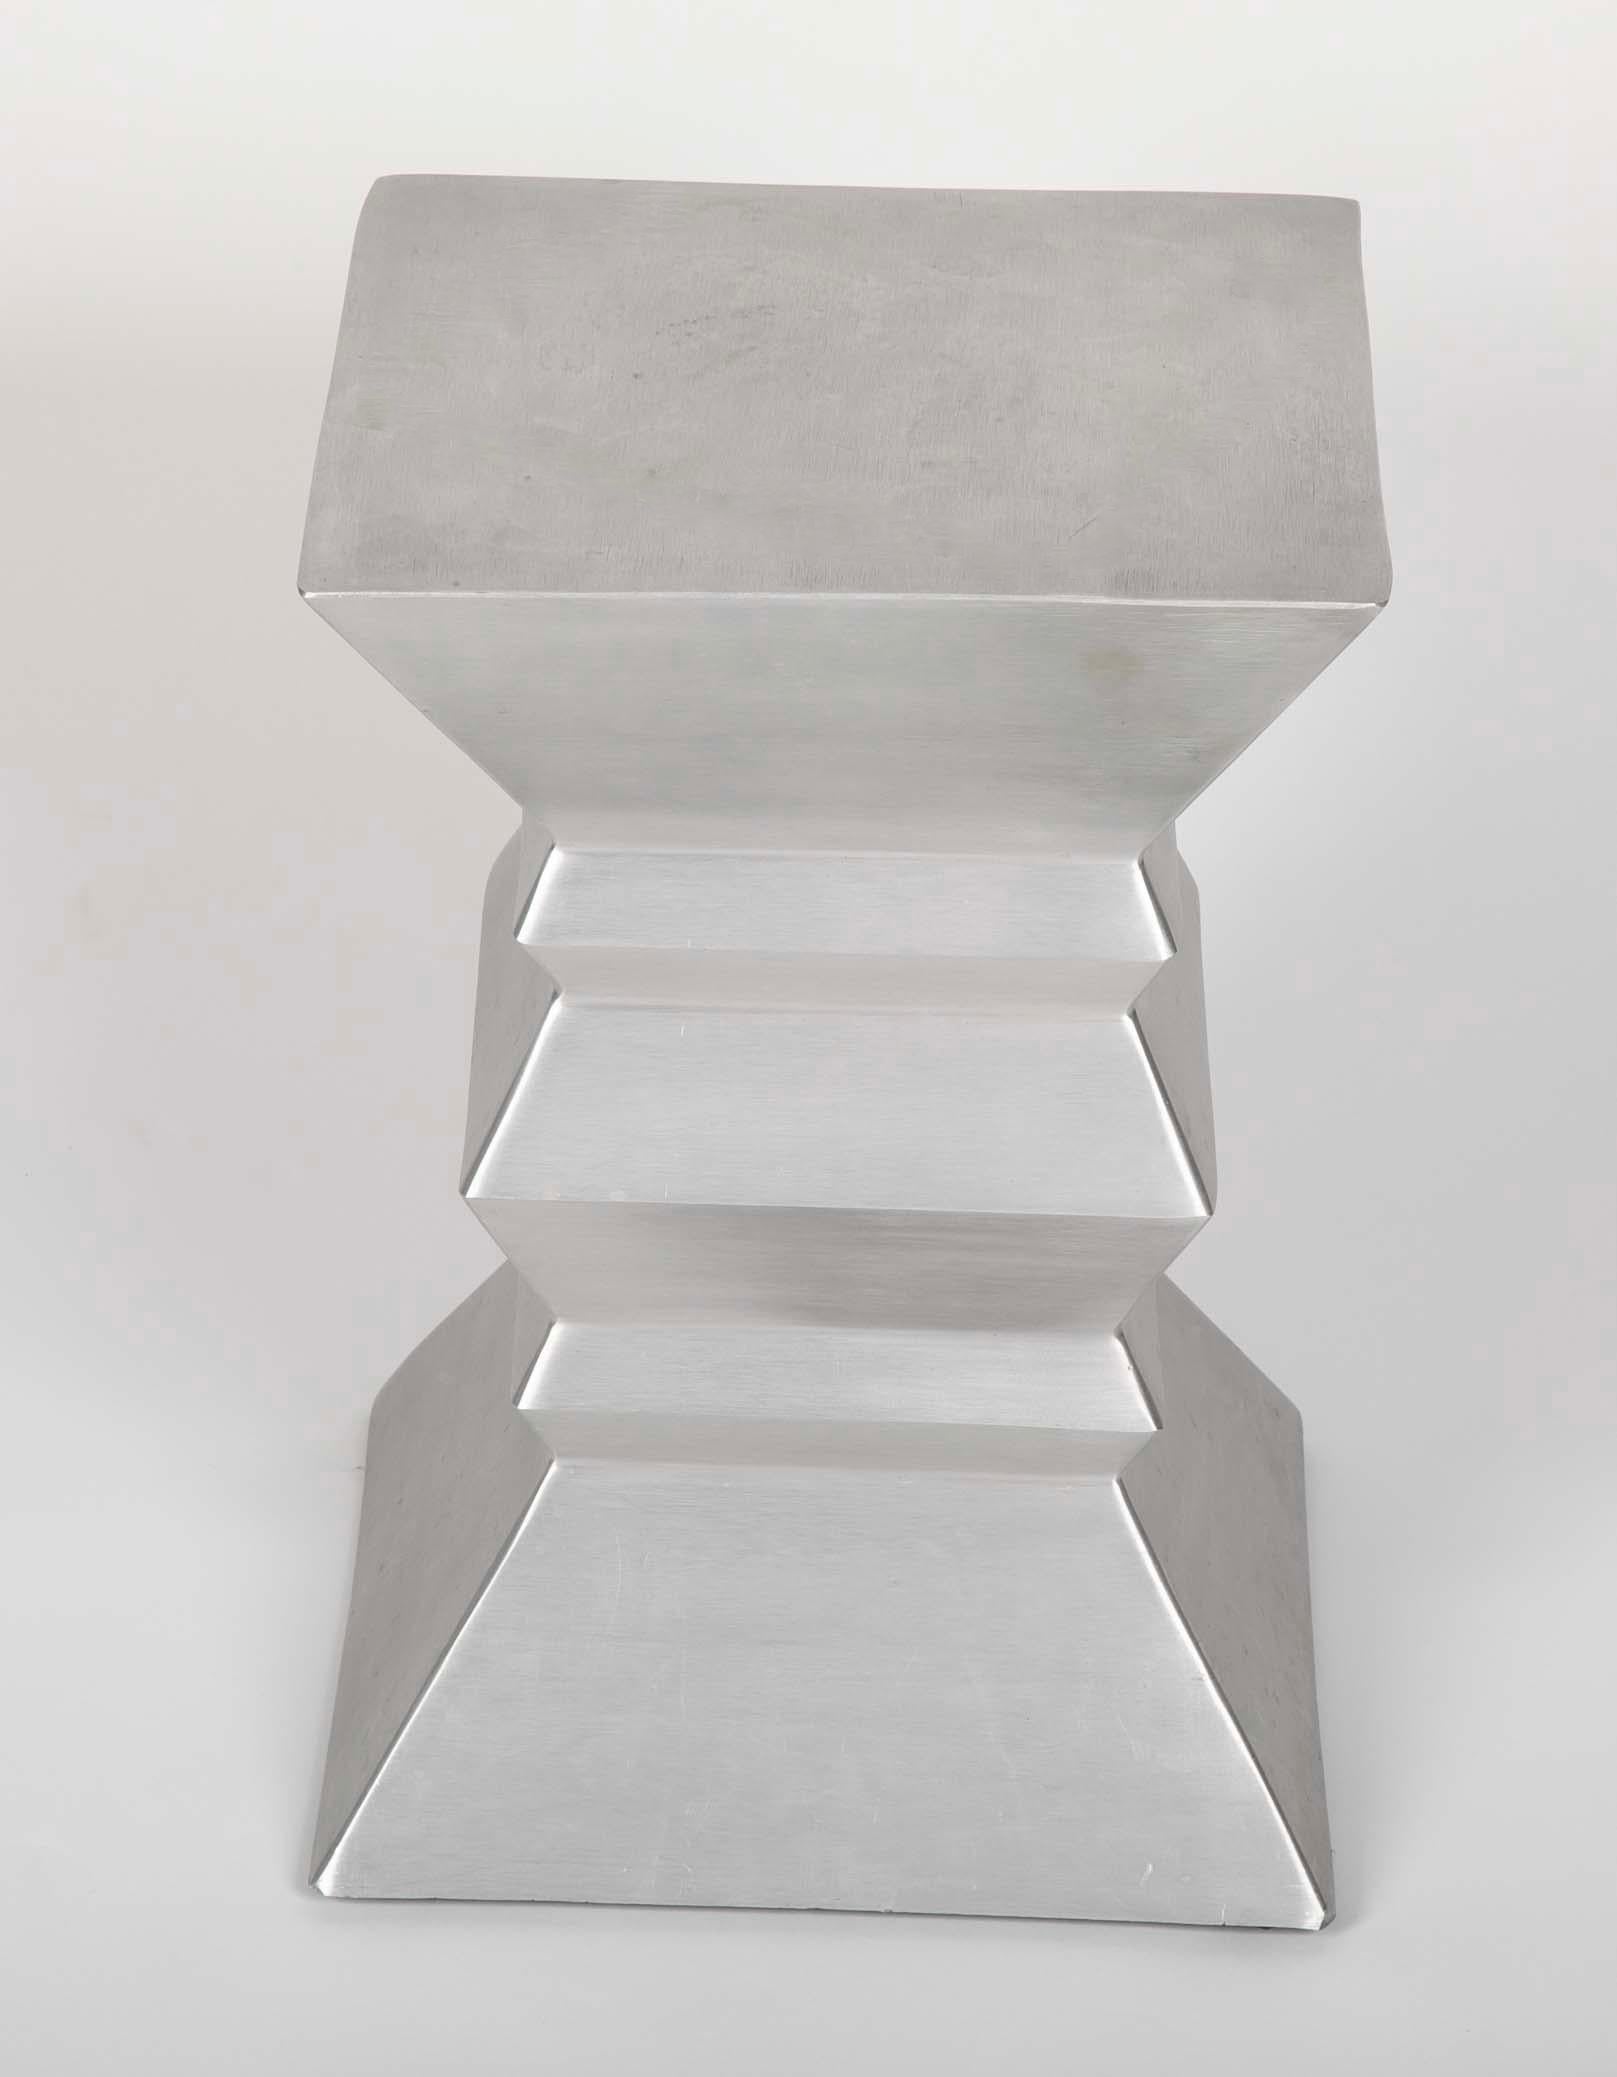 American Brancusi Style Aluminum Side Tables, a Set of Three